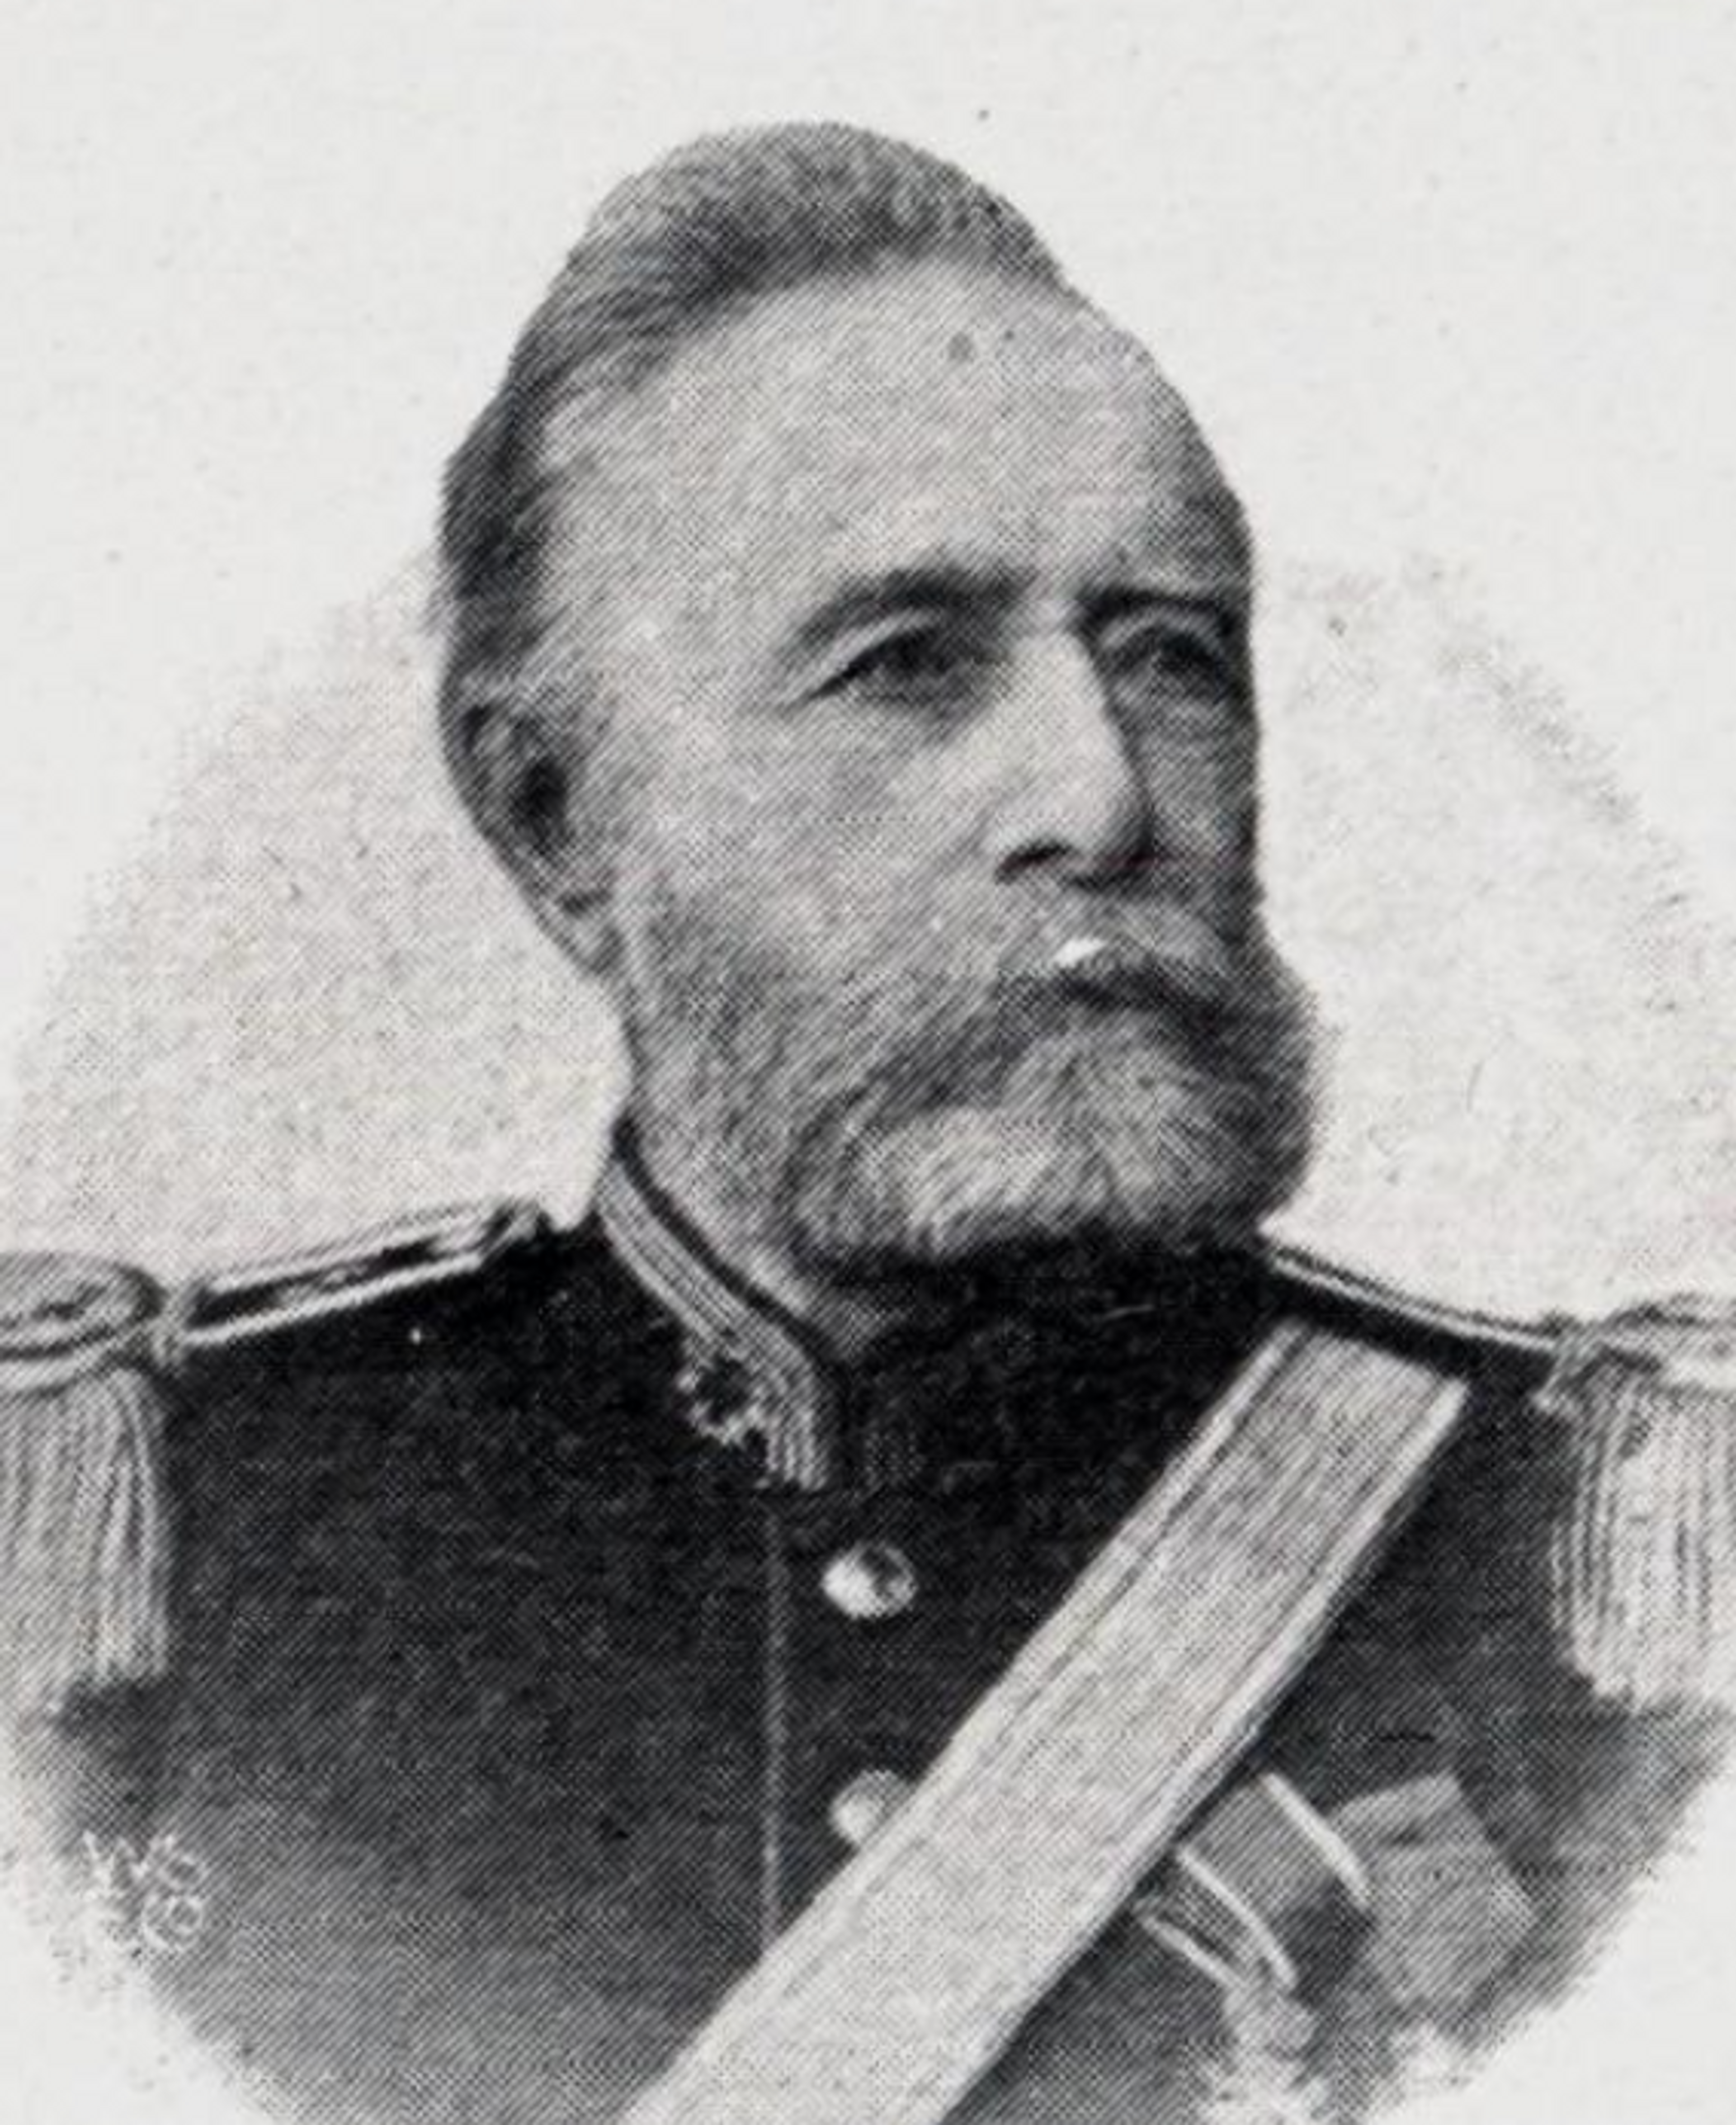 Johan Wilhelm Storjohann Martens